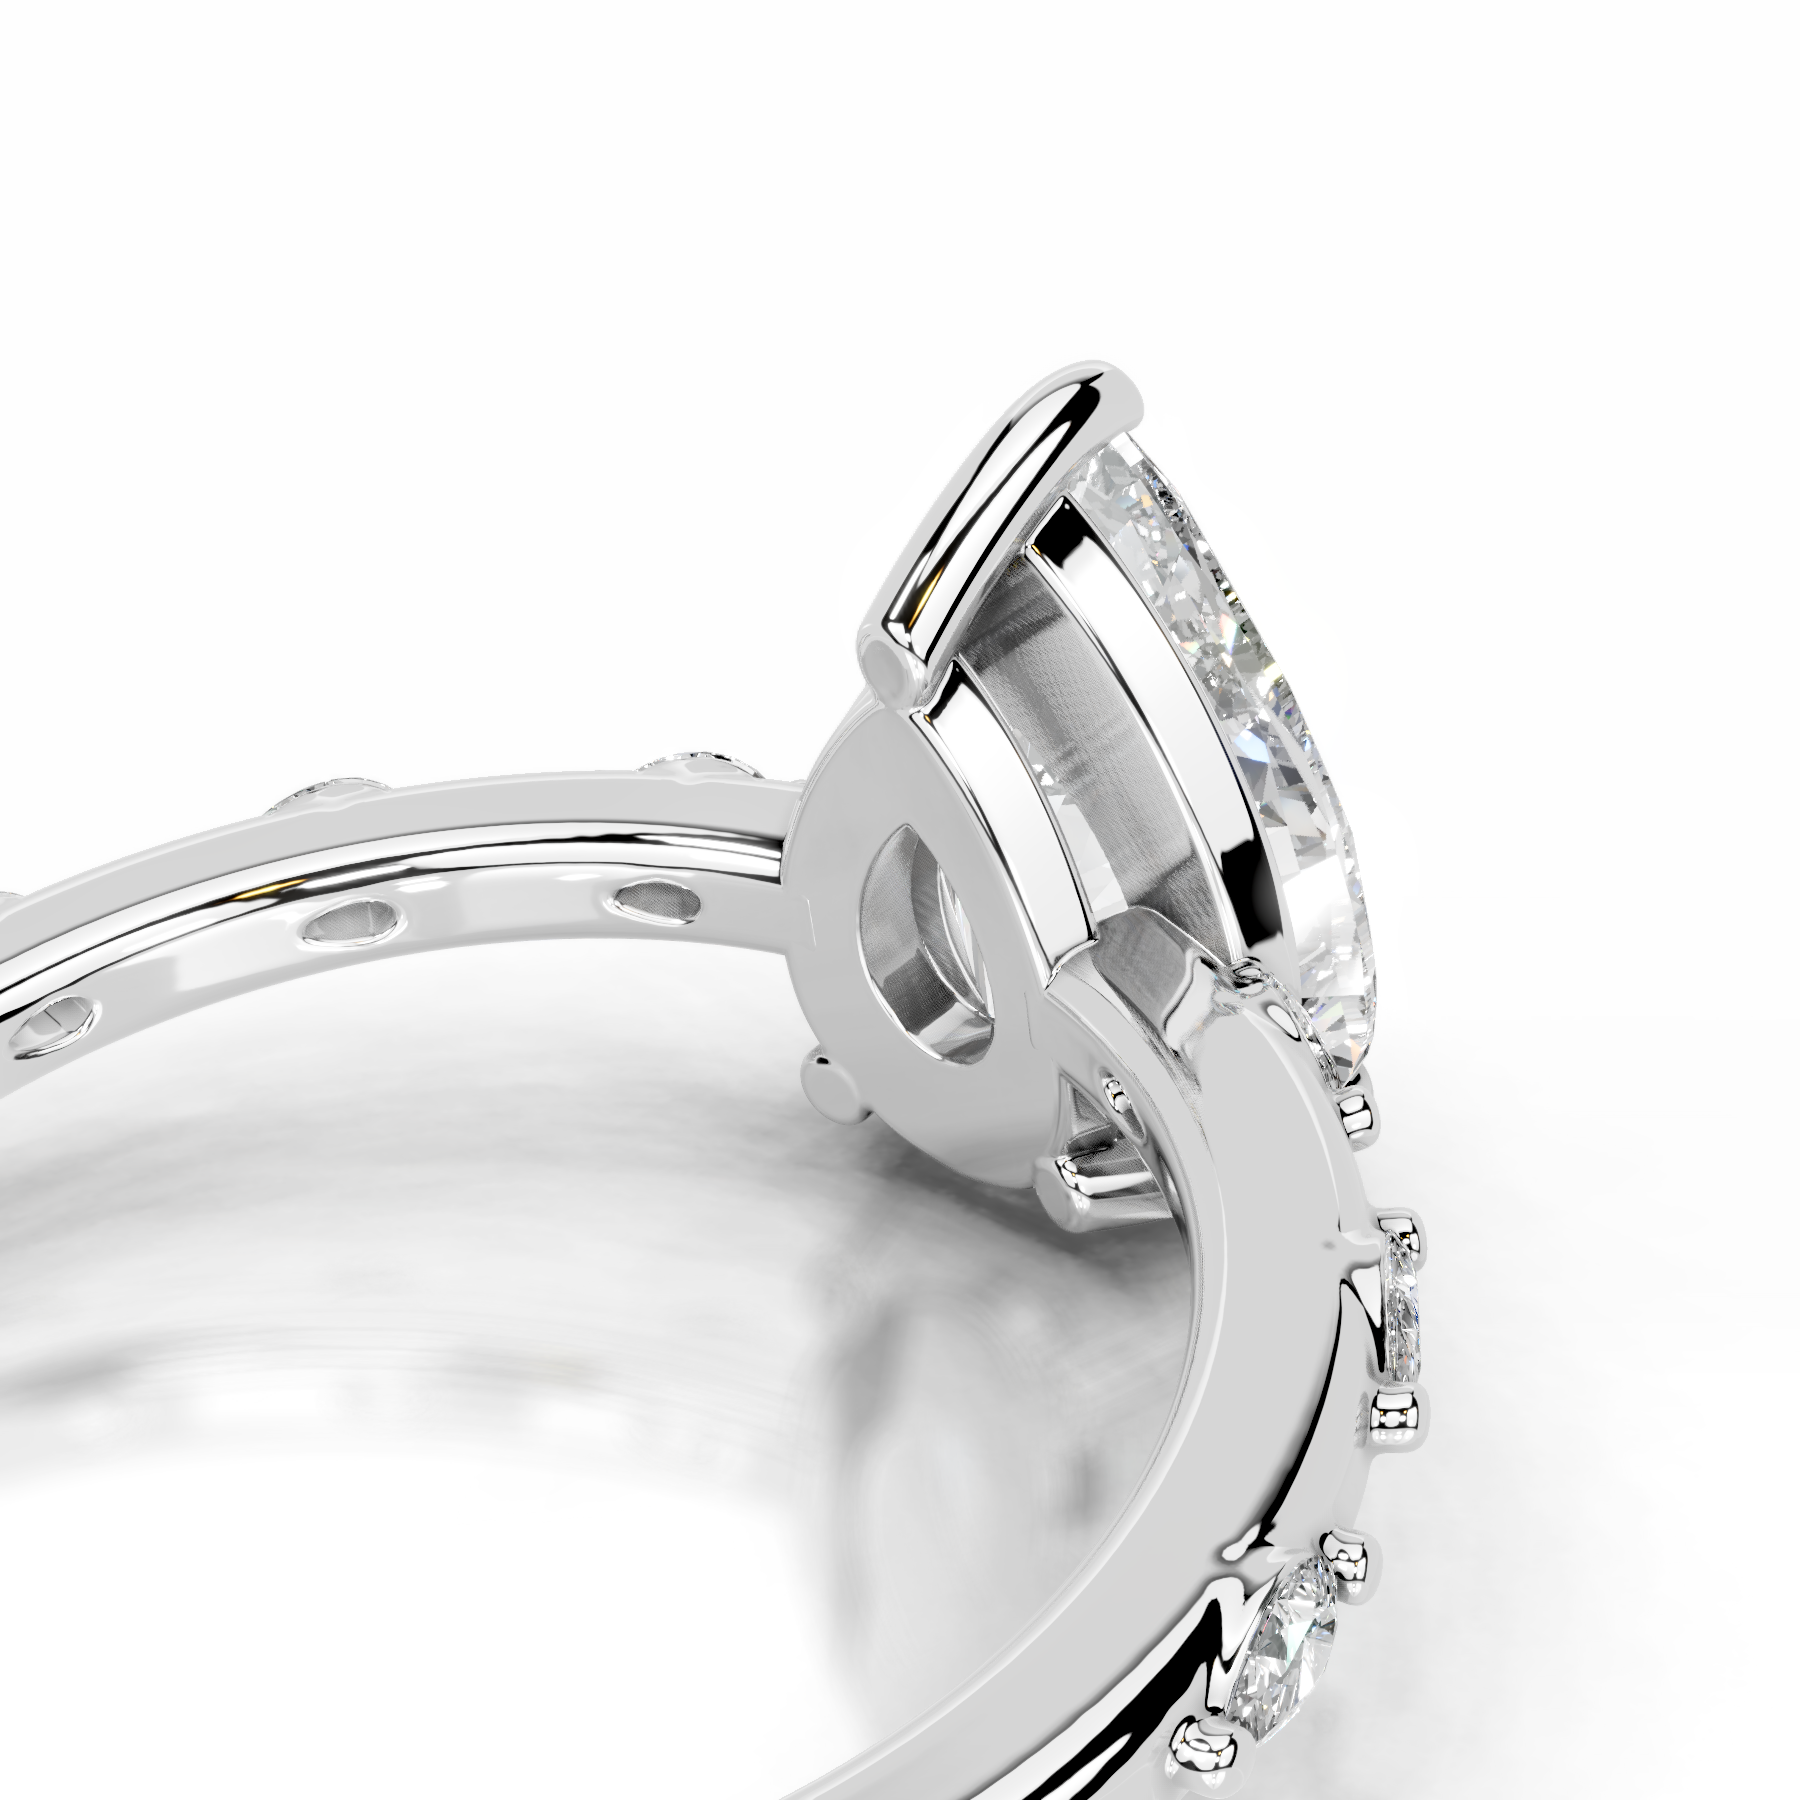 Nadya Diamond Engagement Ring   (2.2 Carat) -Platinum